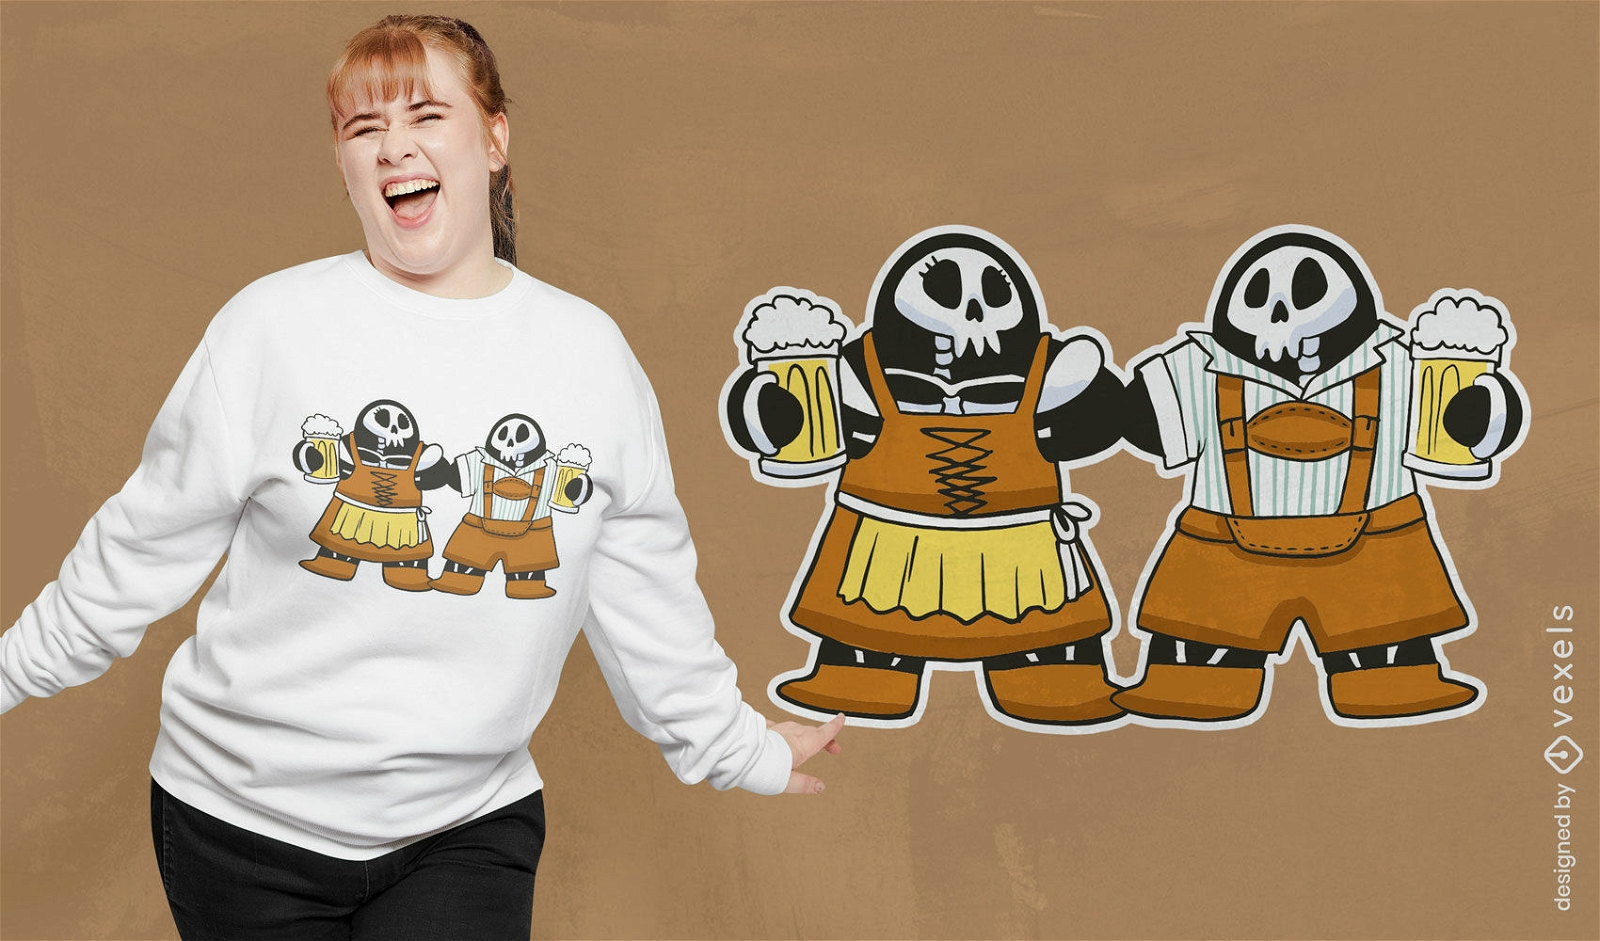 Festive Oktoberfest meeples skeletons t-shirt design